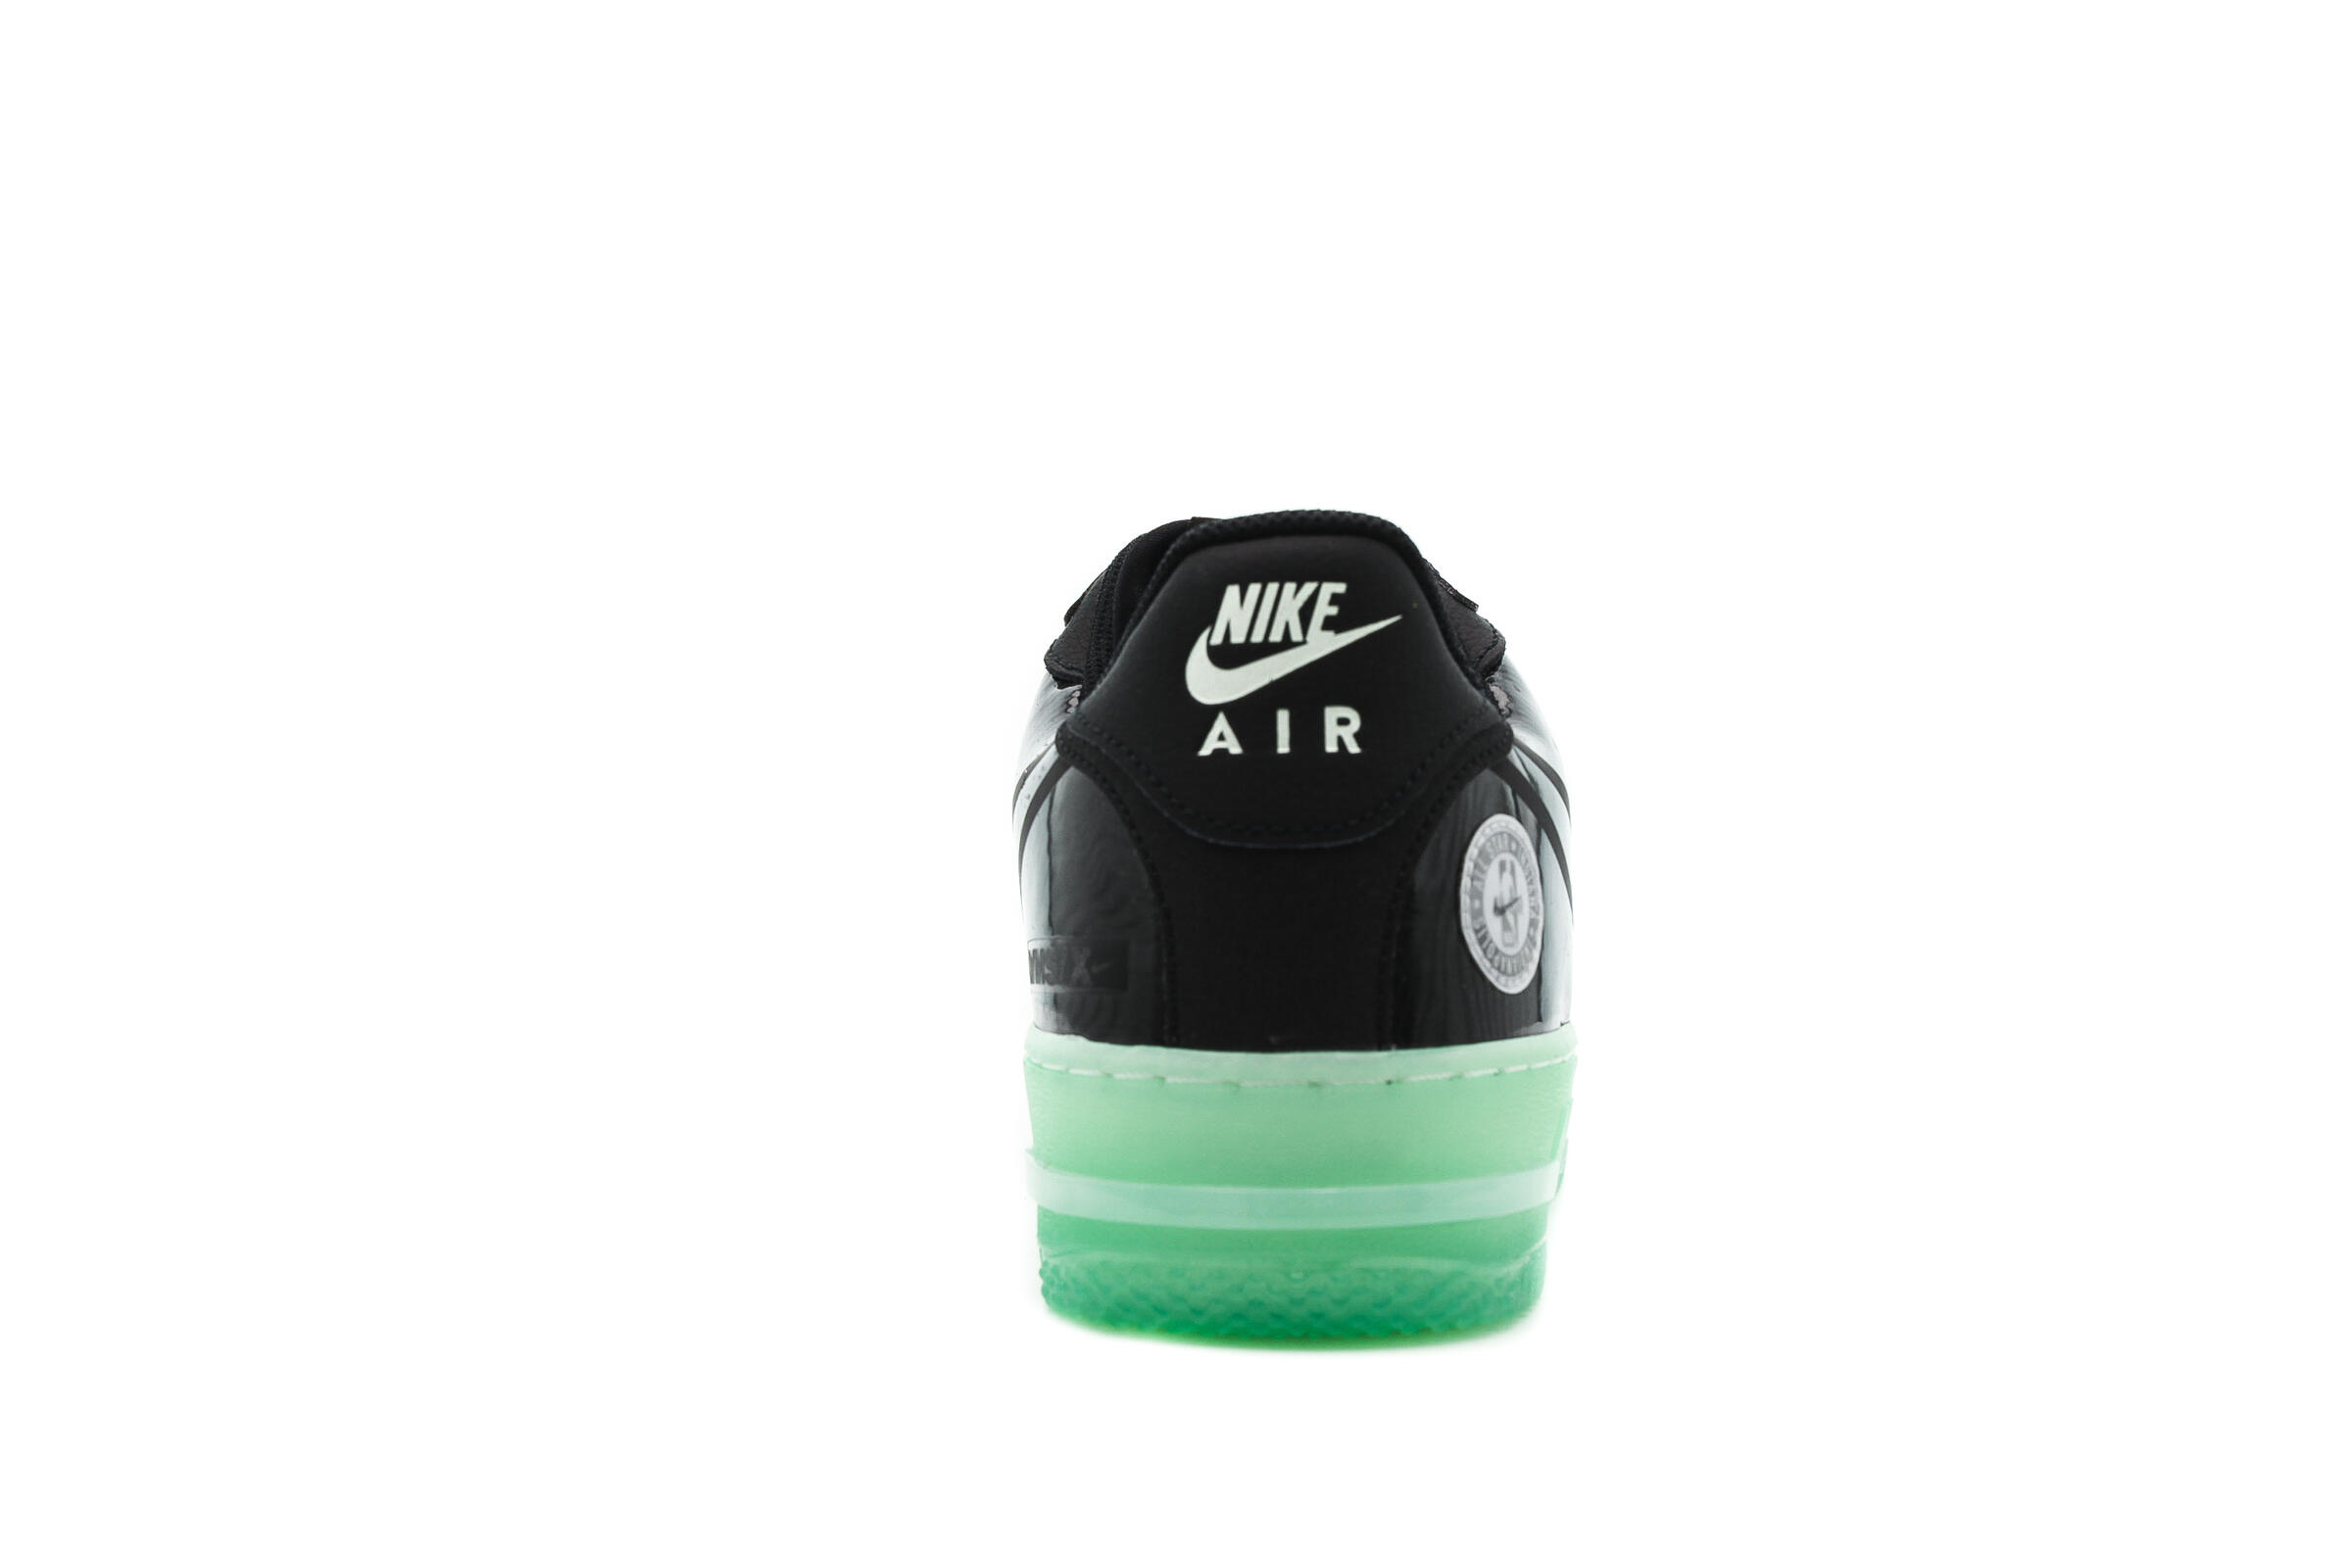 Nike AIR FORCE 1 REACT LV8 "ALL STAR"